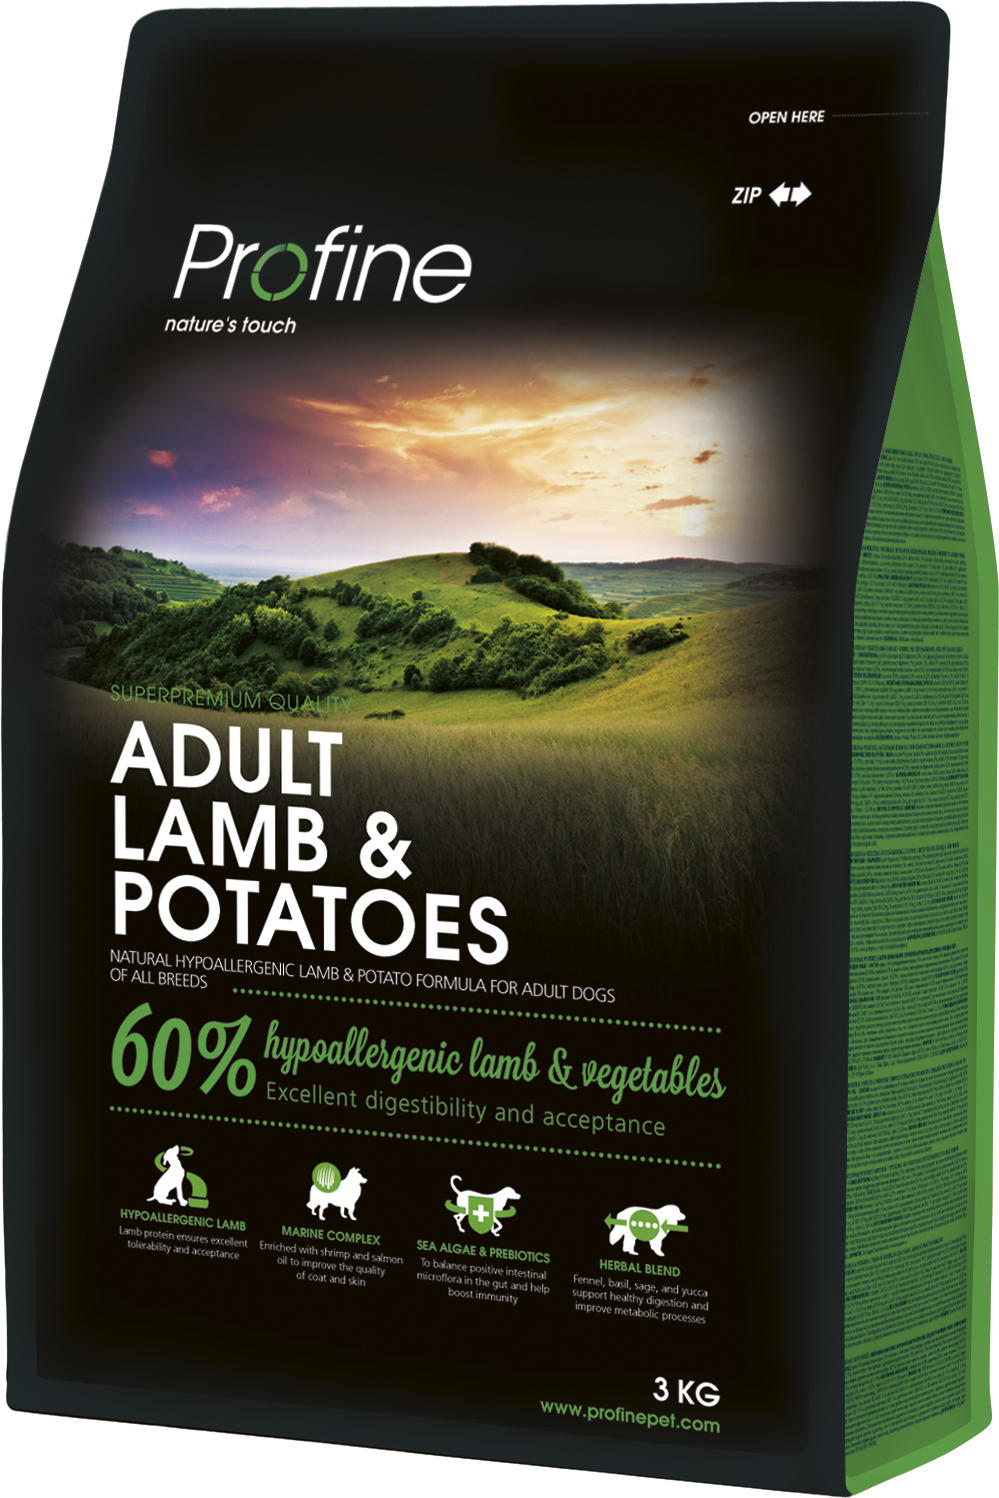 Profine Adult Lamb & Potatoes - zoom